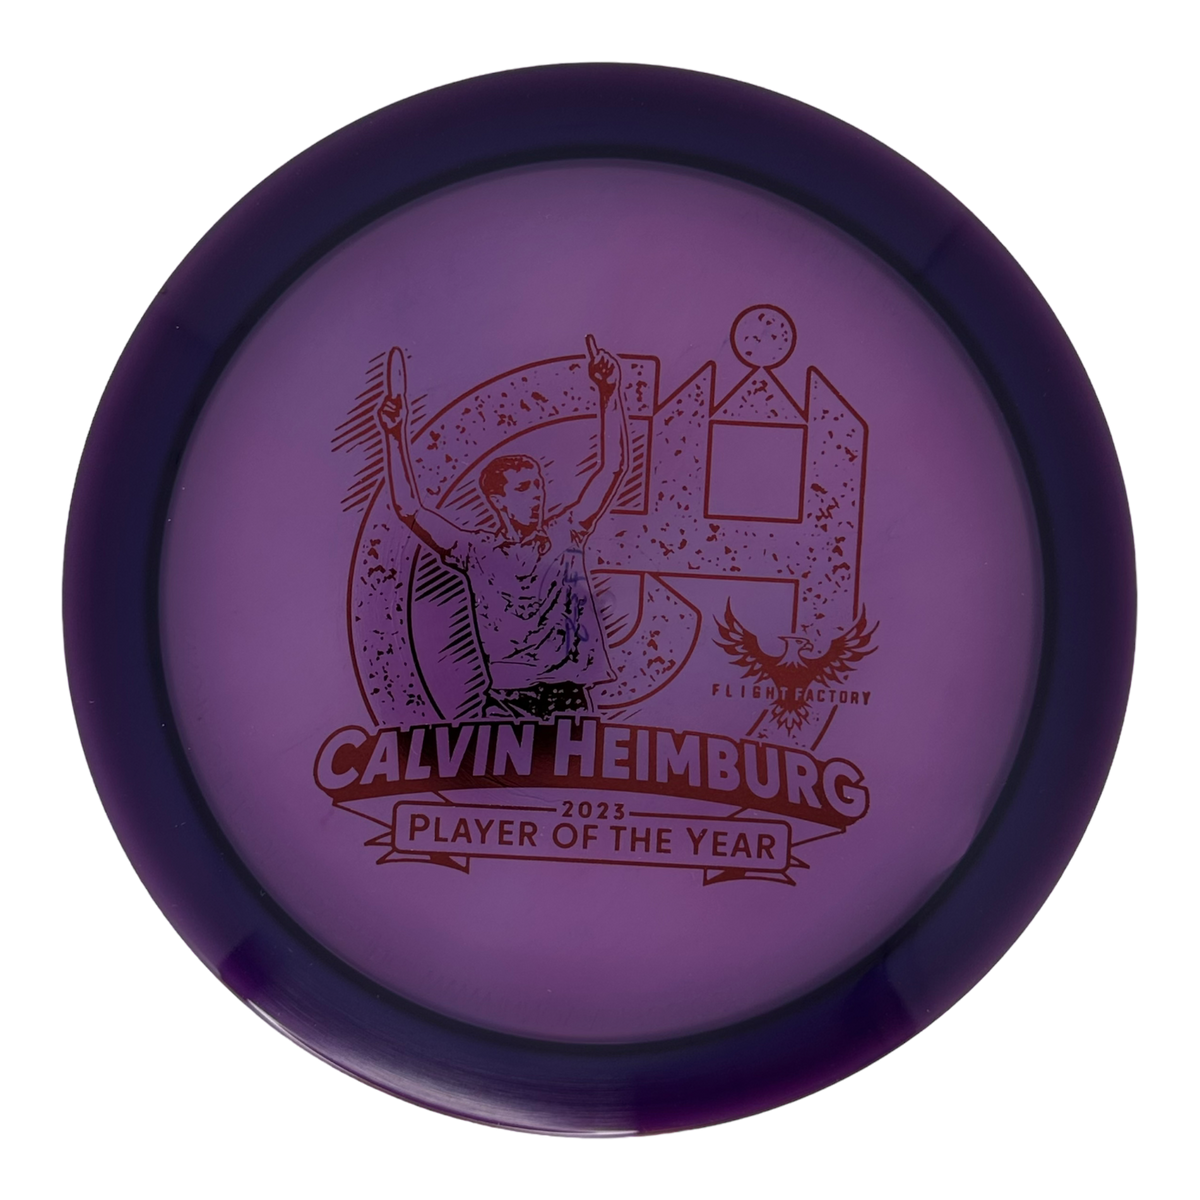 Innova Champion Flat Top Firebird - Calvin Heimburg Player of the Year (2023)